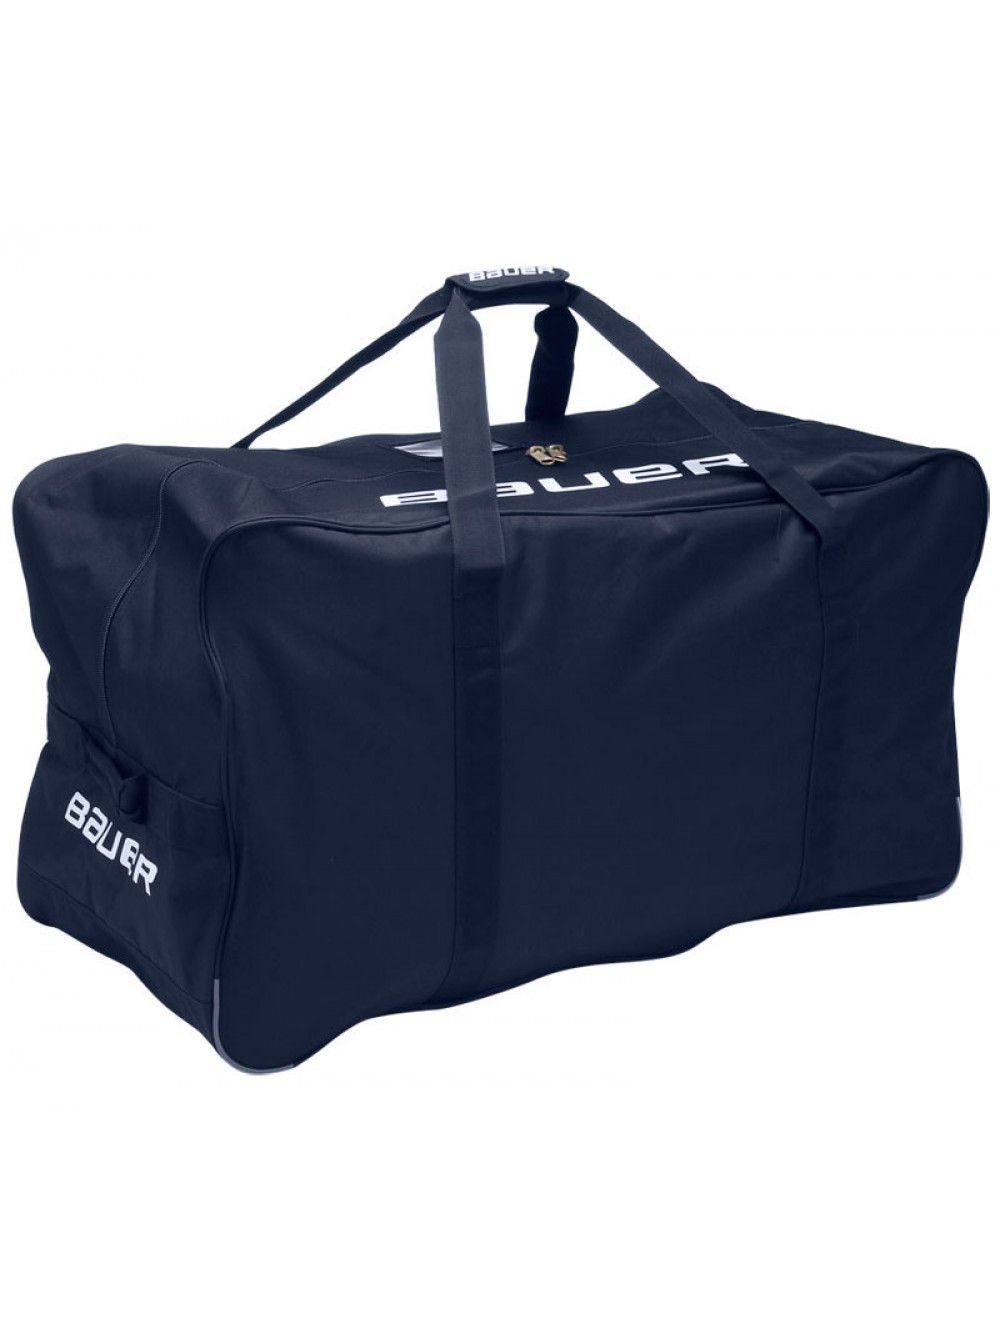  Bauer Team Carry Bag Core (LAR)